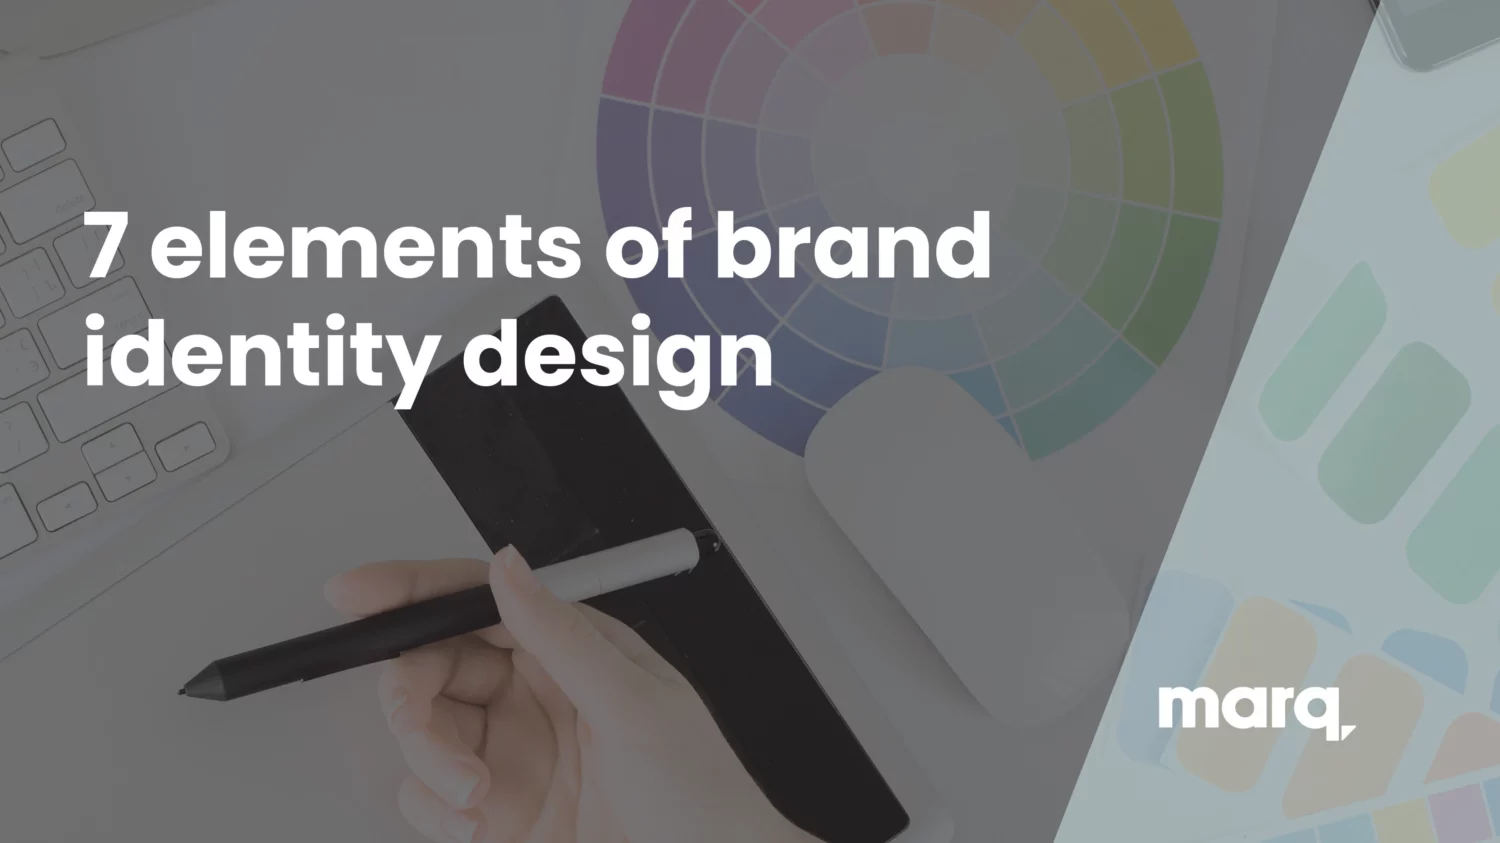 The 7 key elements of brand identity design - Marq